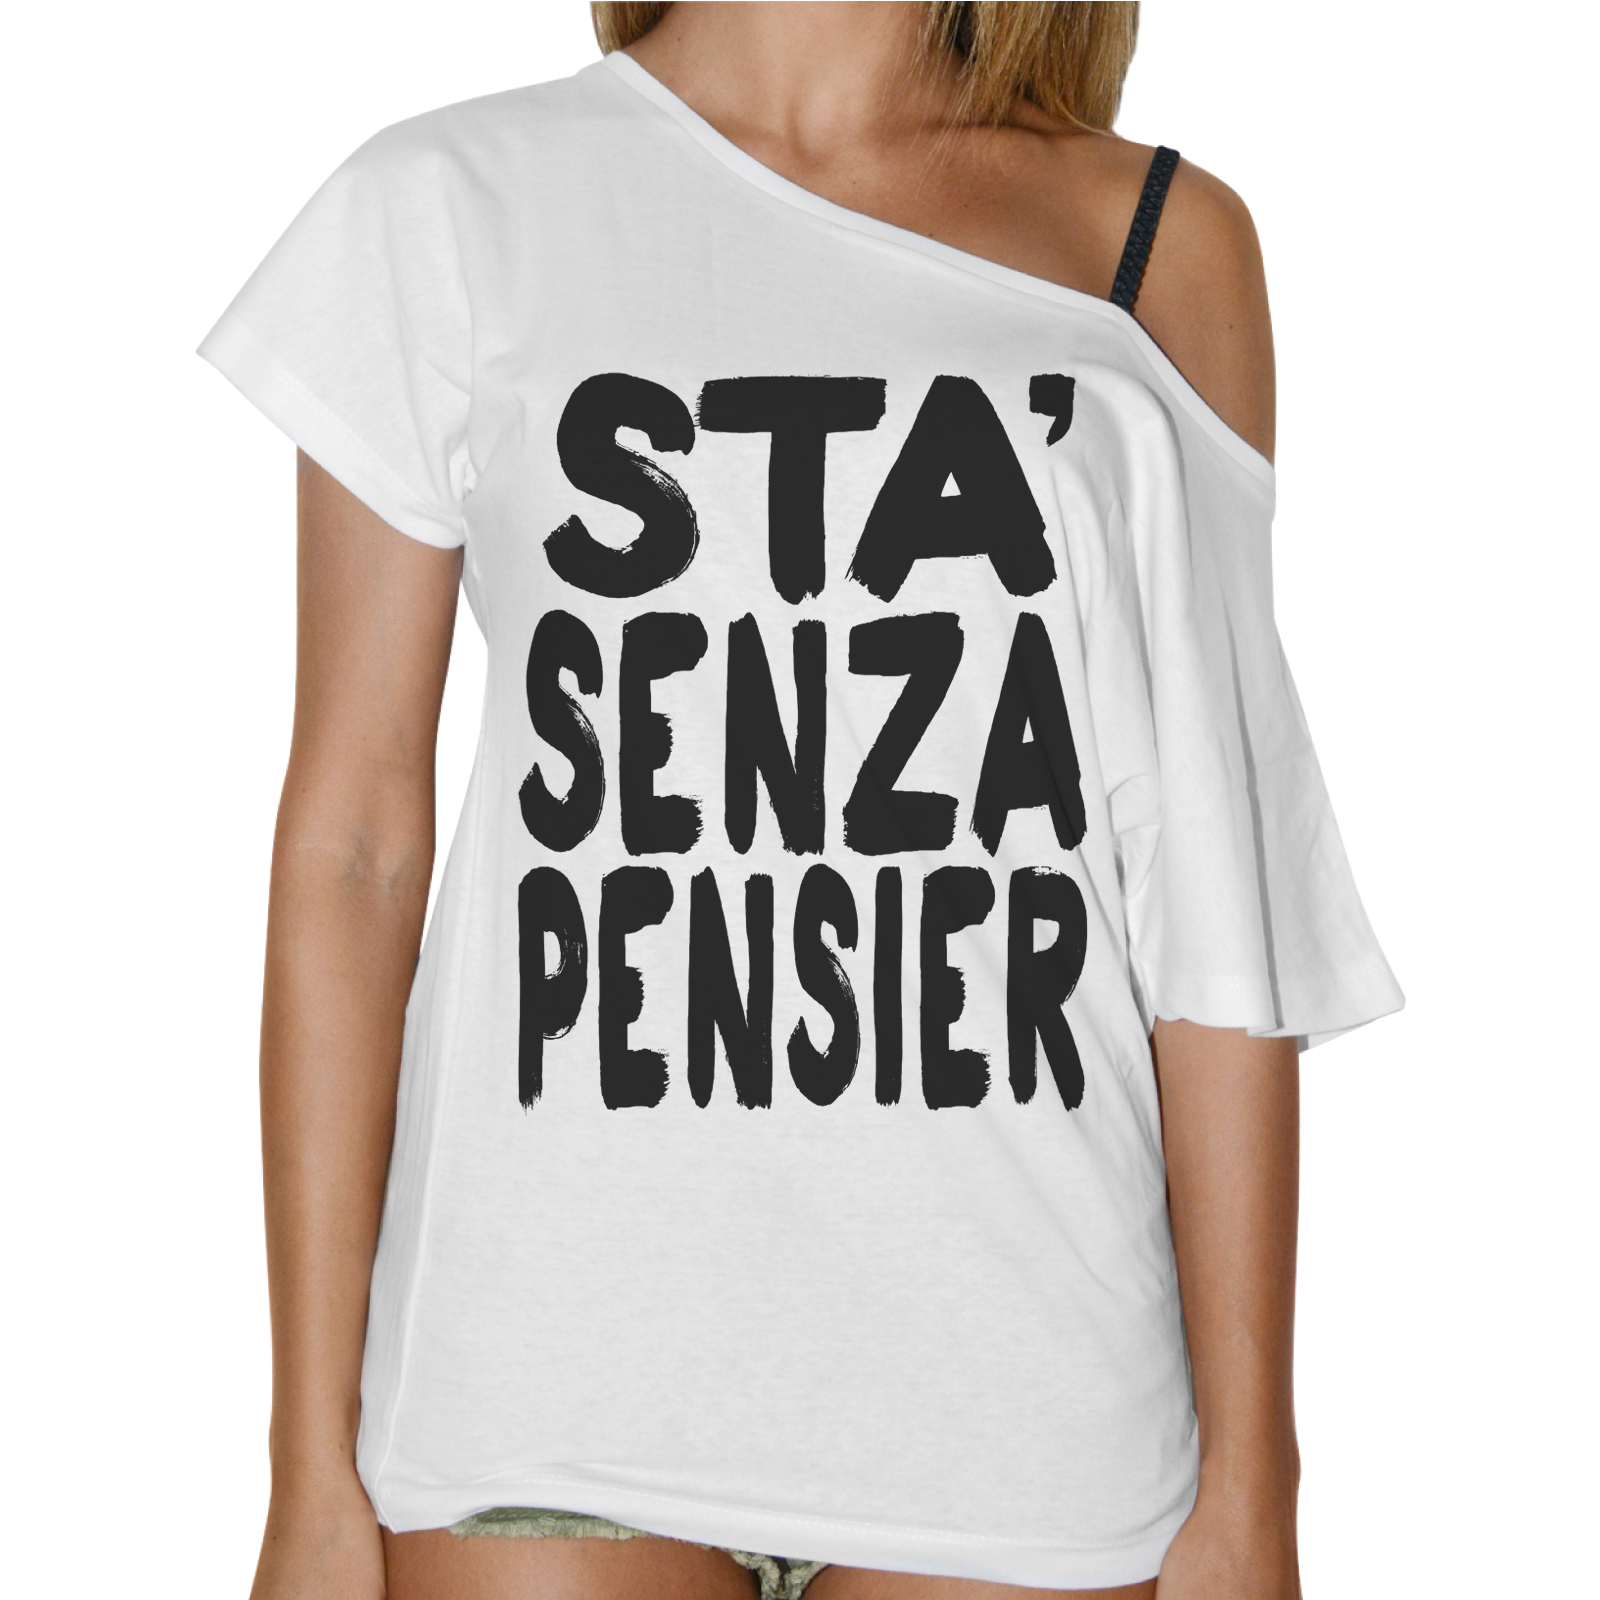 T-Shirt Donna Collo Barca STA SENZA PENSIER